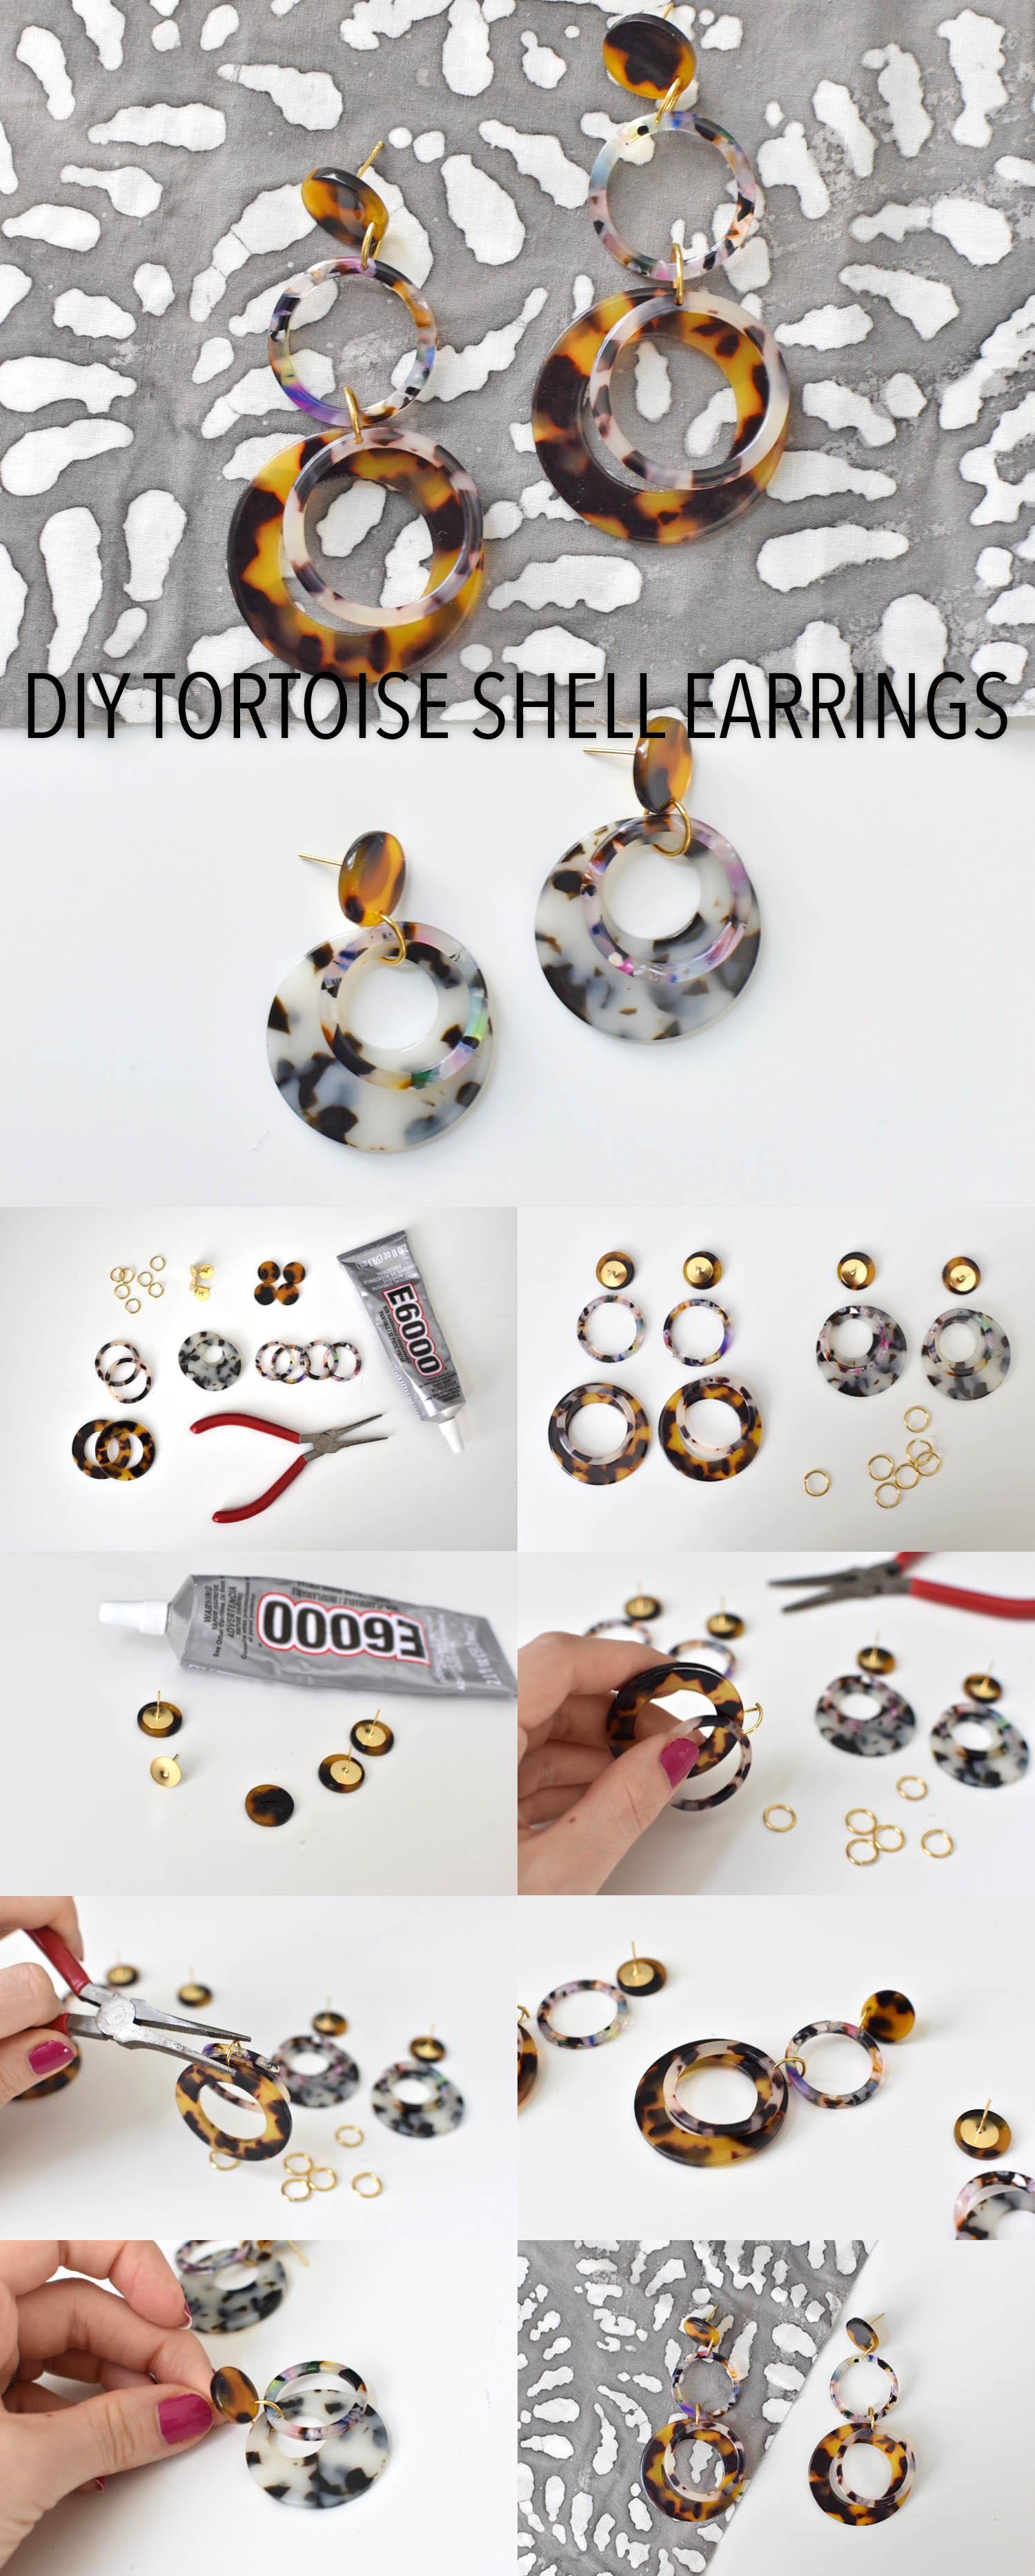 DIY Tortoiseshell circle earrings